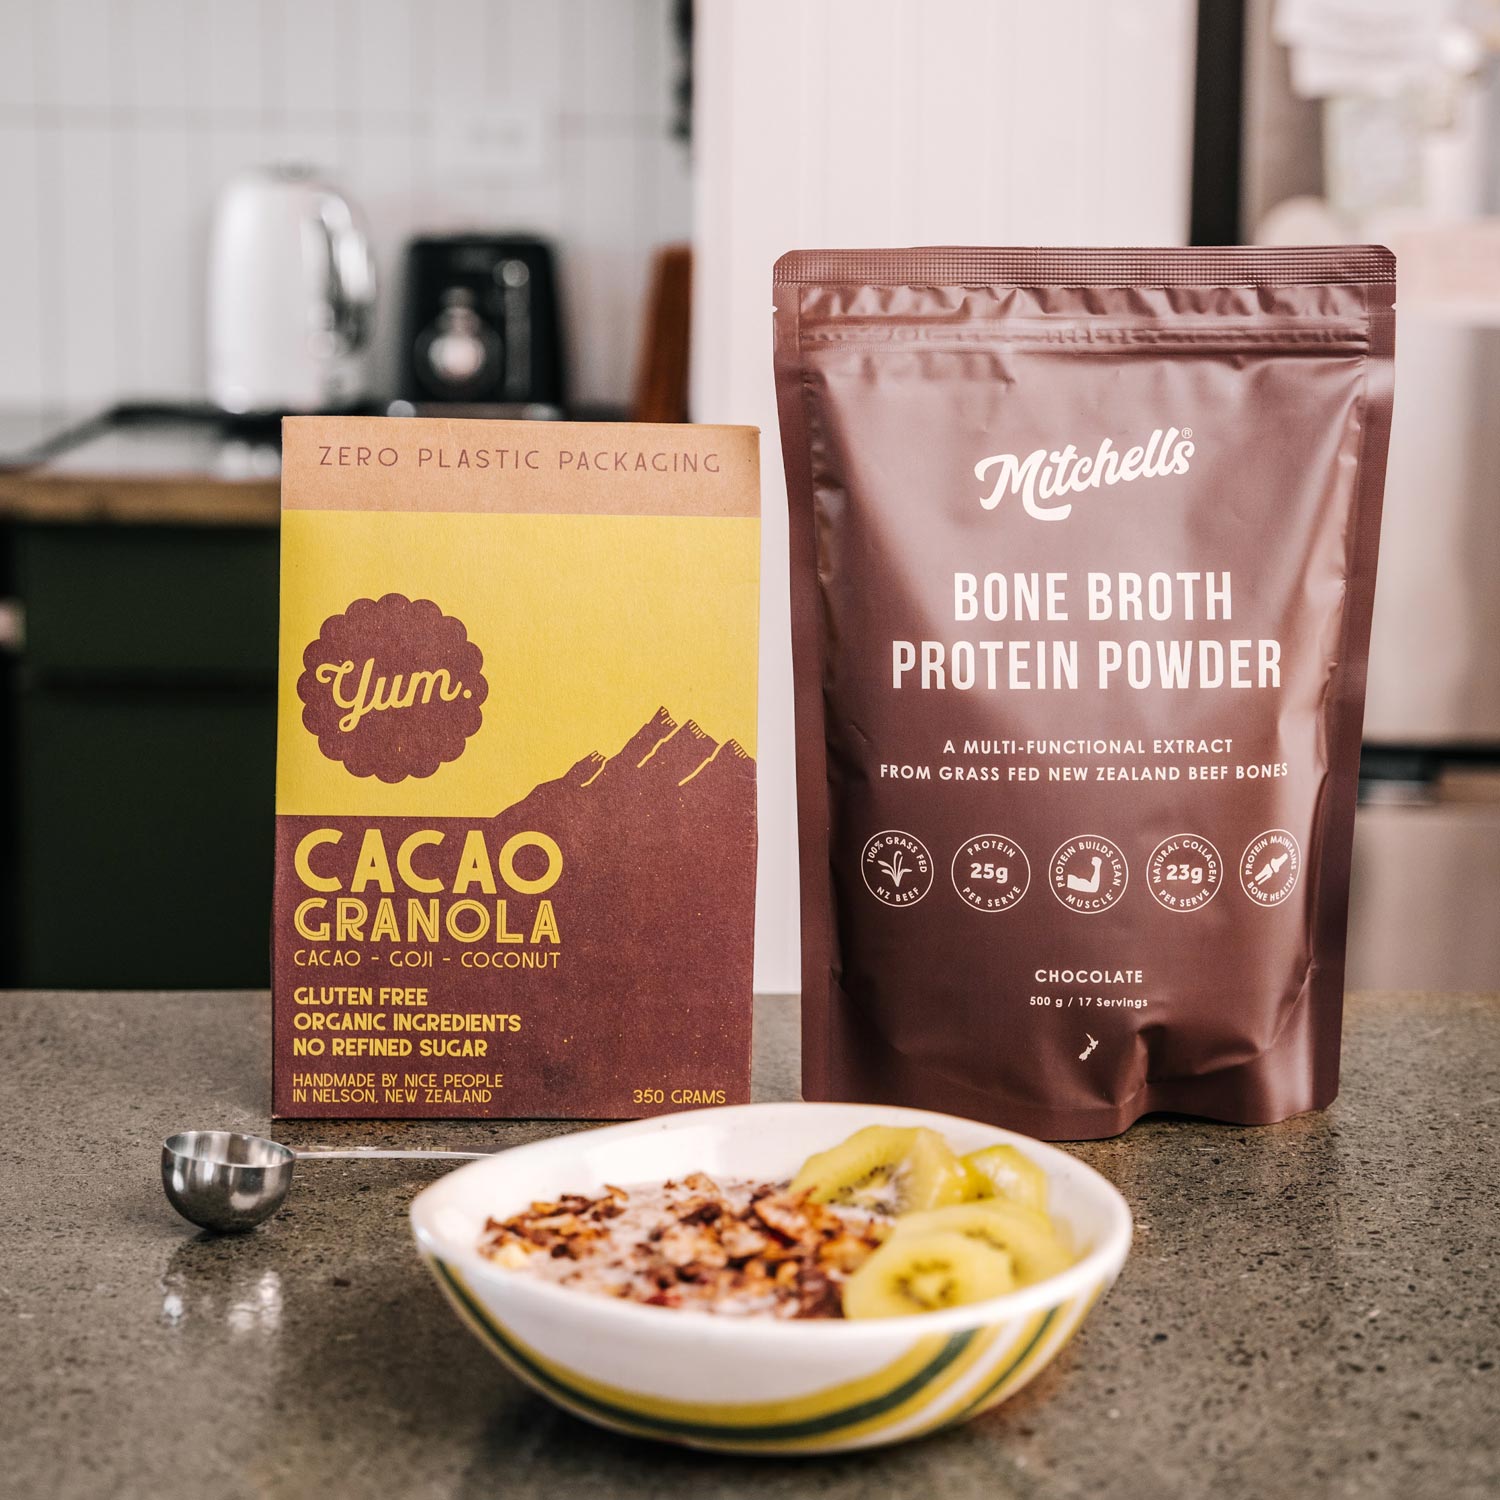 Mitchells Nutrition x Yum Collab - Chocolate Bone Broth Protein Powder and Yum Cacao Granola